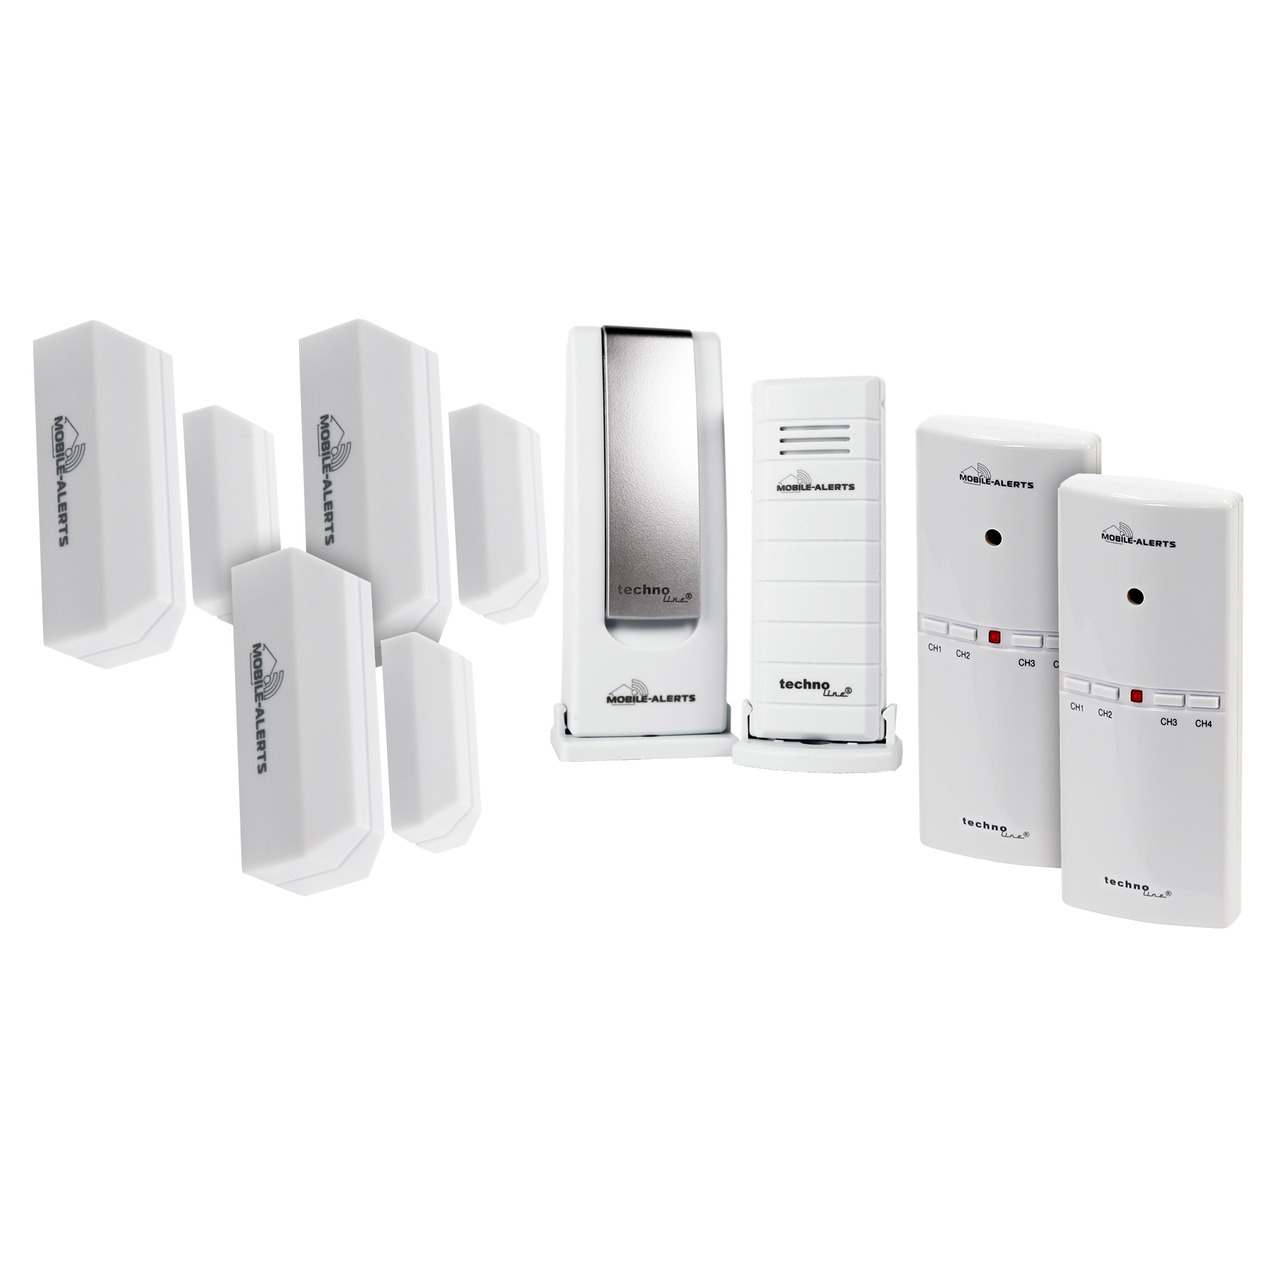 Mobile Alerts Sicherheits-Set 1x Gateway- 1x Temperatursensor- 3x Fensterkontakt- 2x Alarmgeber